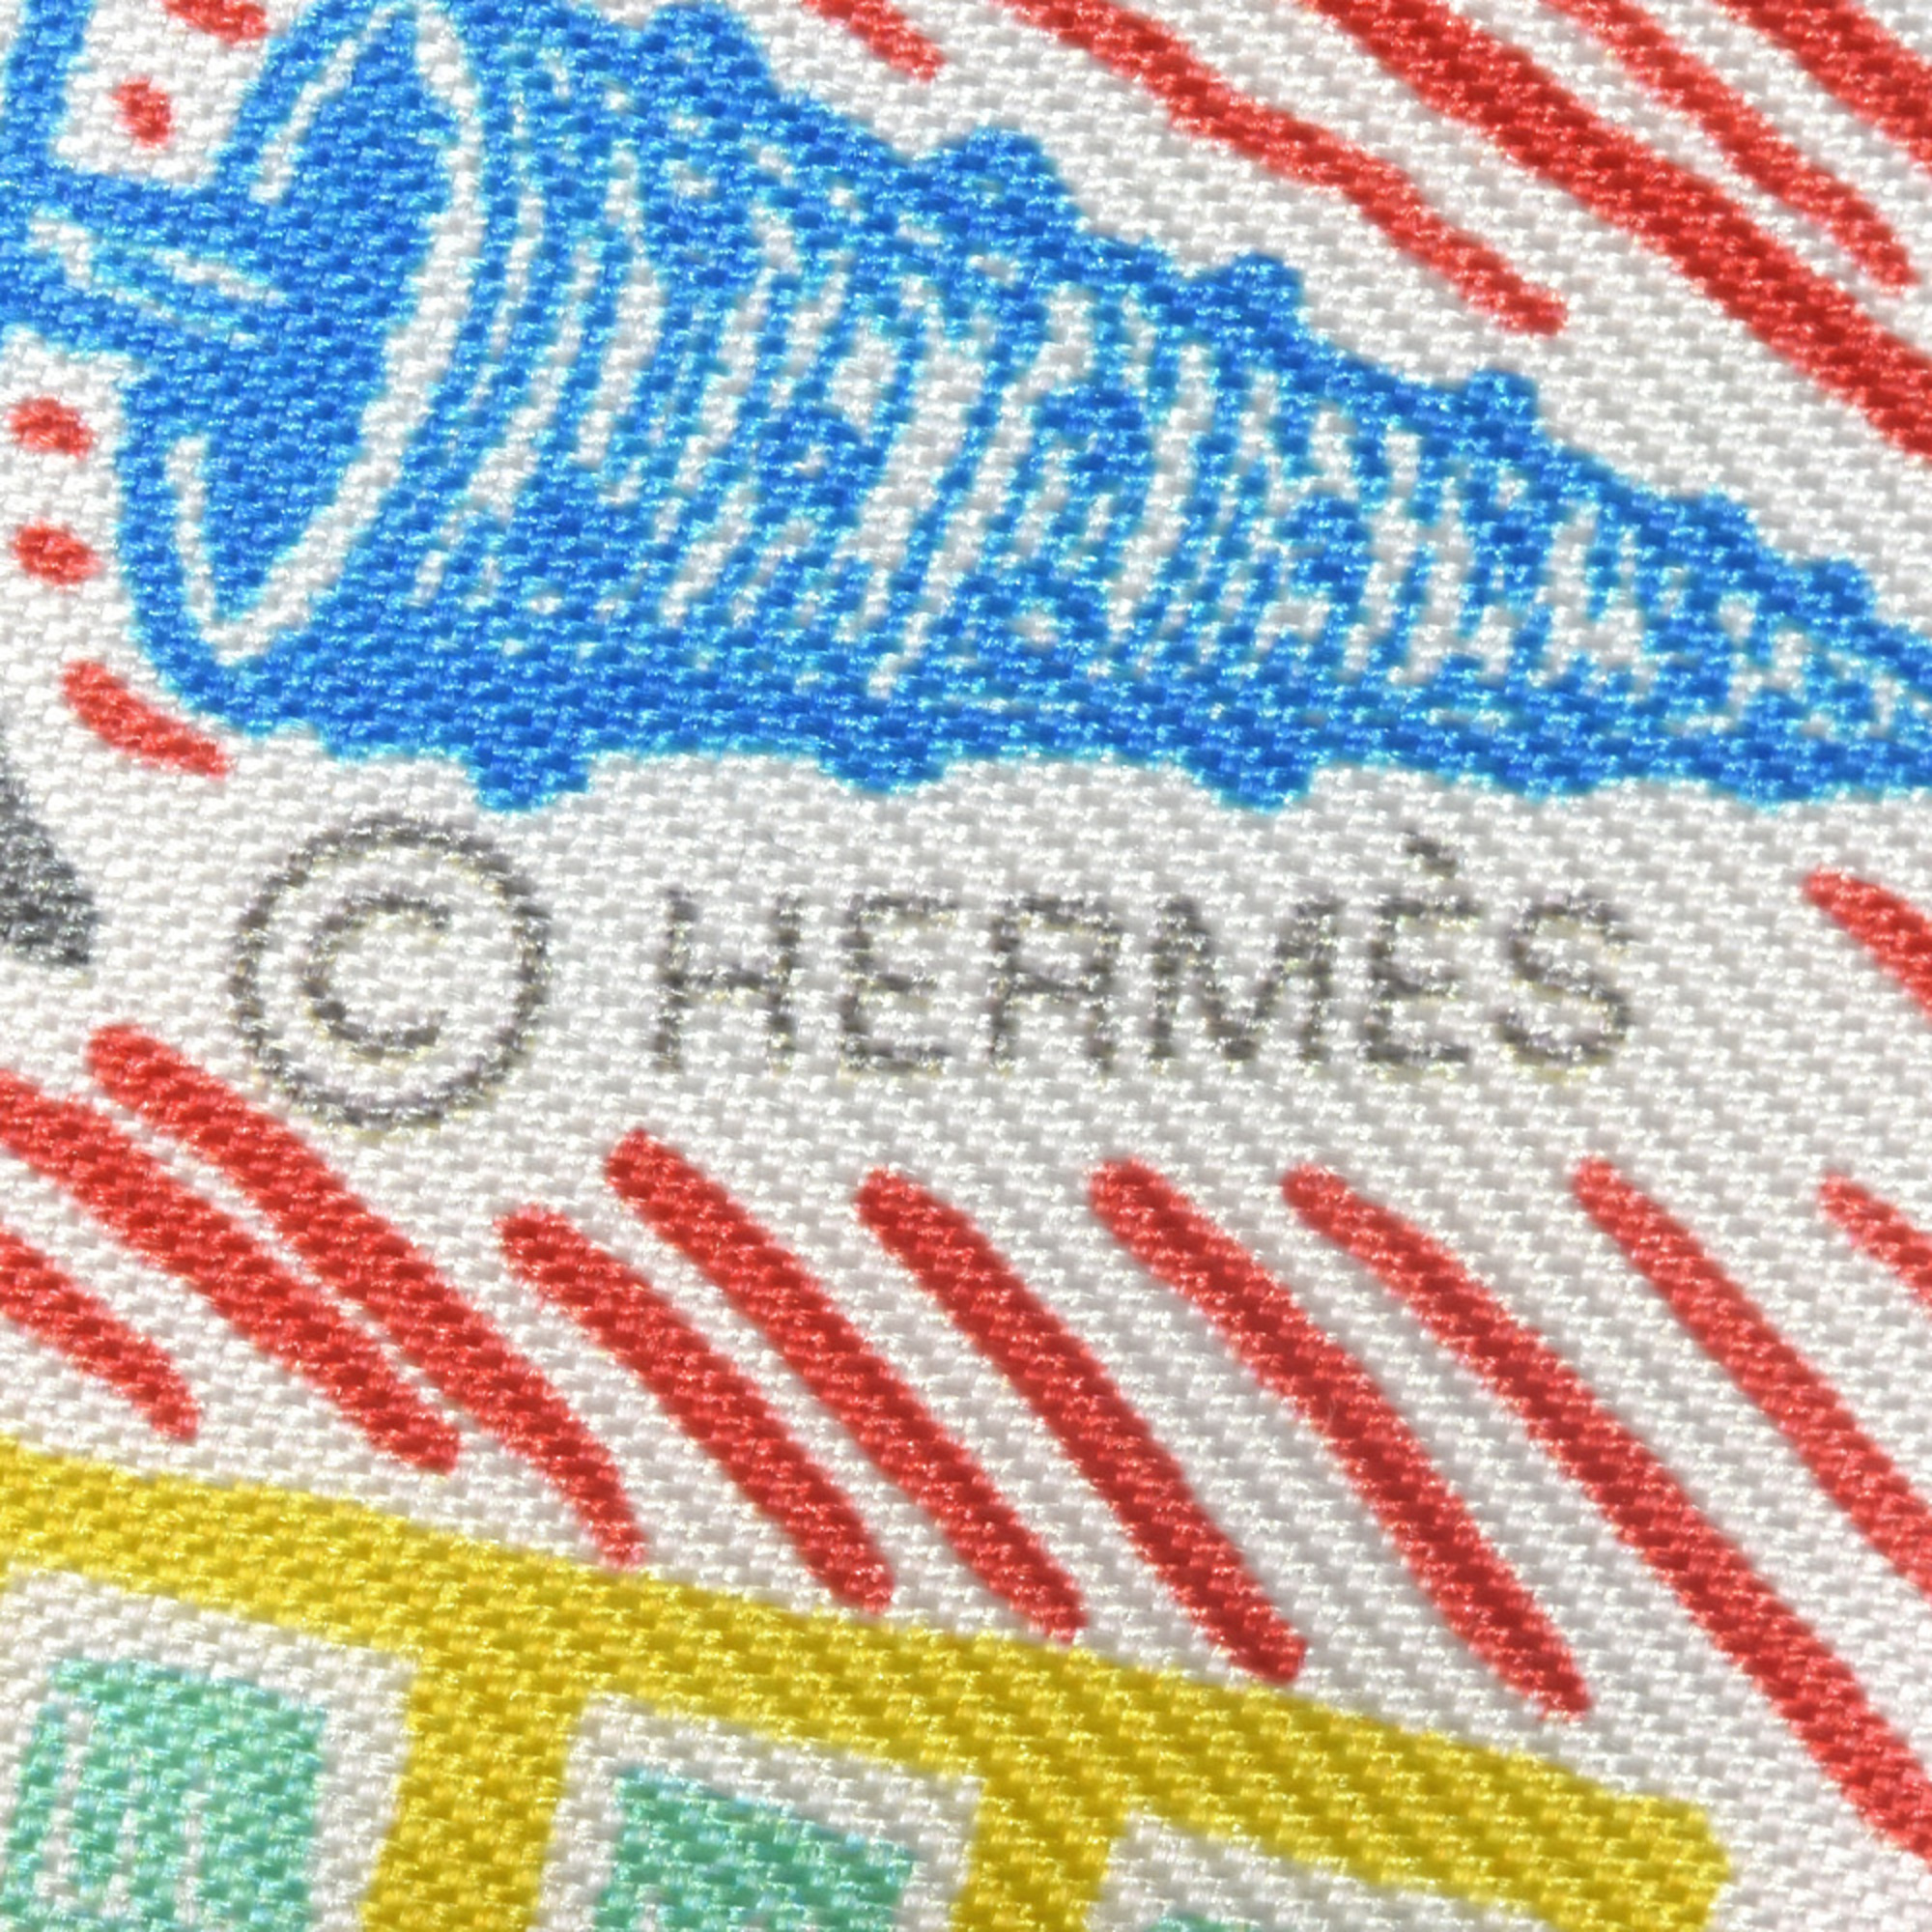 Hermes HERMES Twilly Super Silk Quest Scarf Muffler 86cm Multicolor Women's ITSZQWYYZBSQ